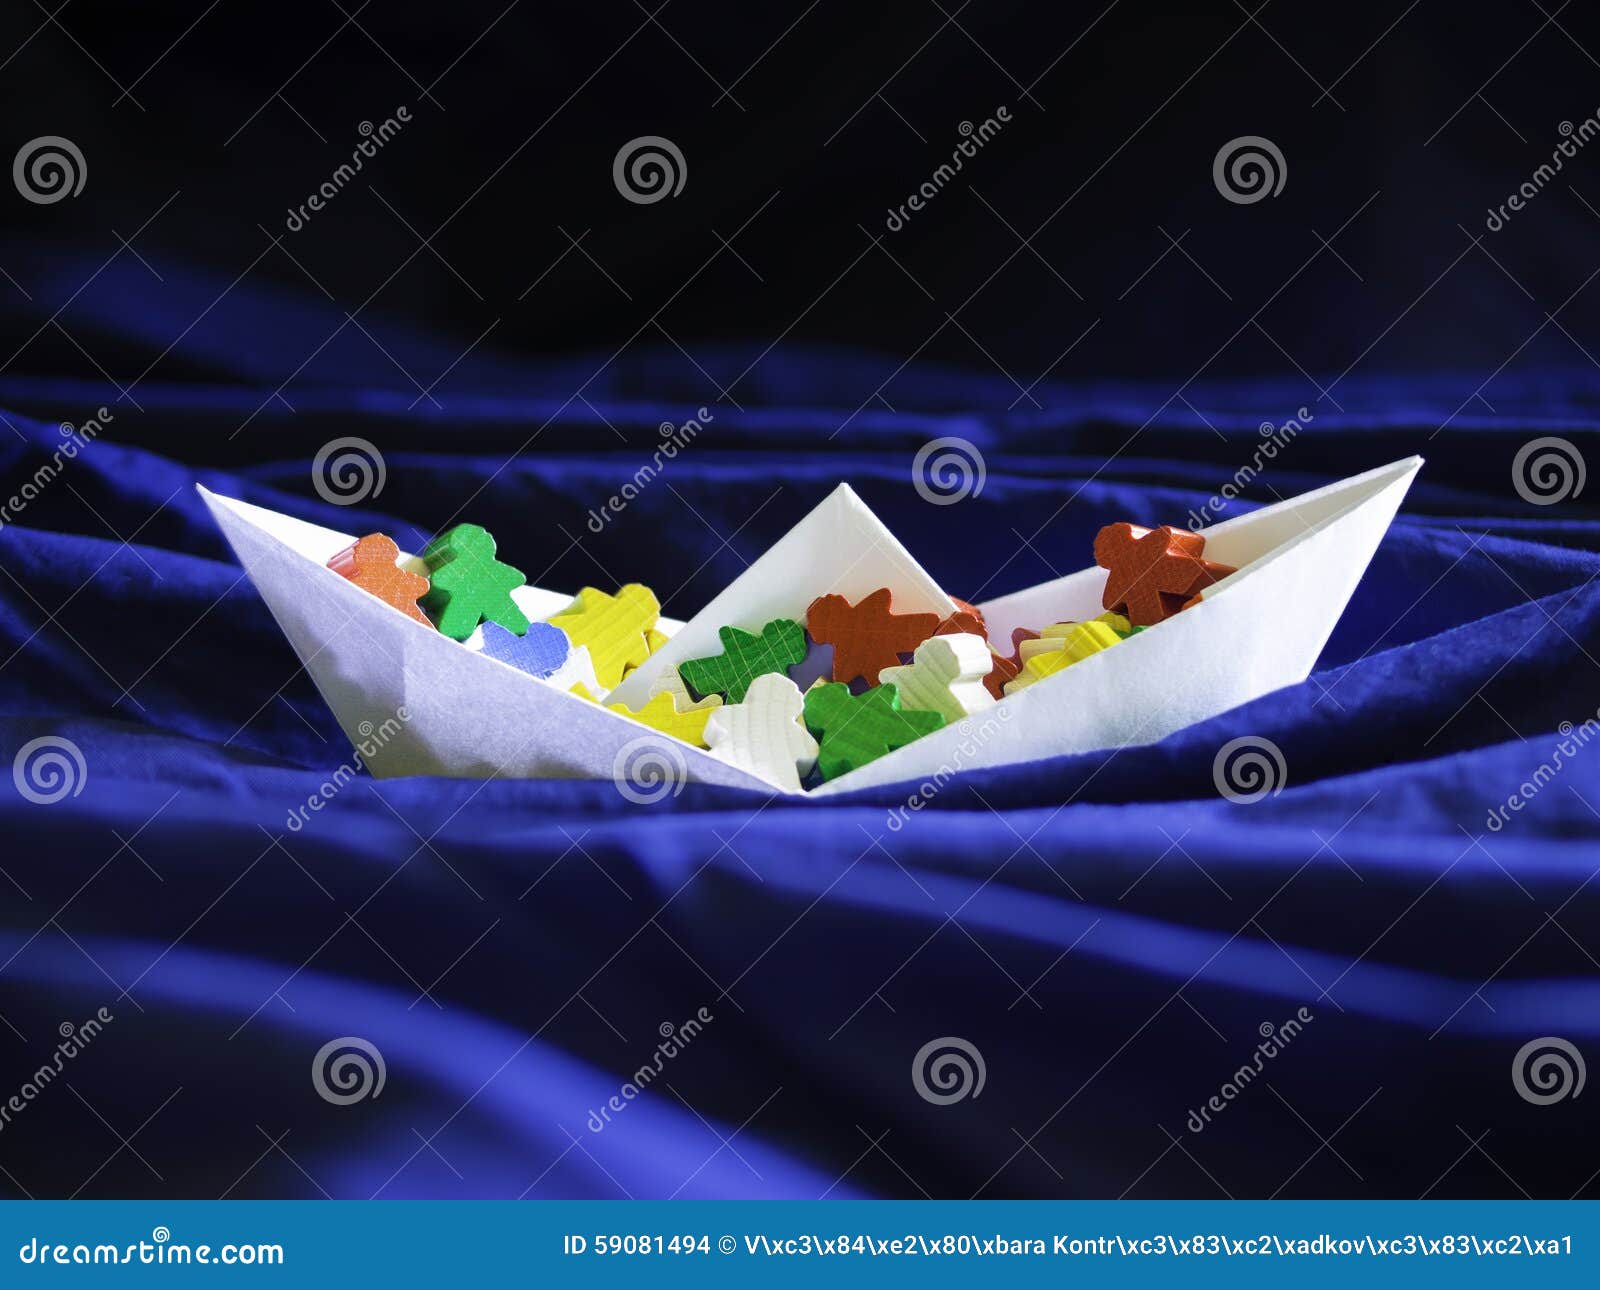 immigration emigration migration concept, paperboat with meeples